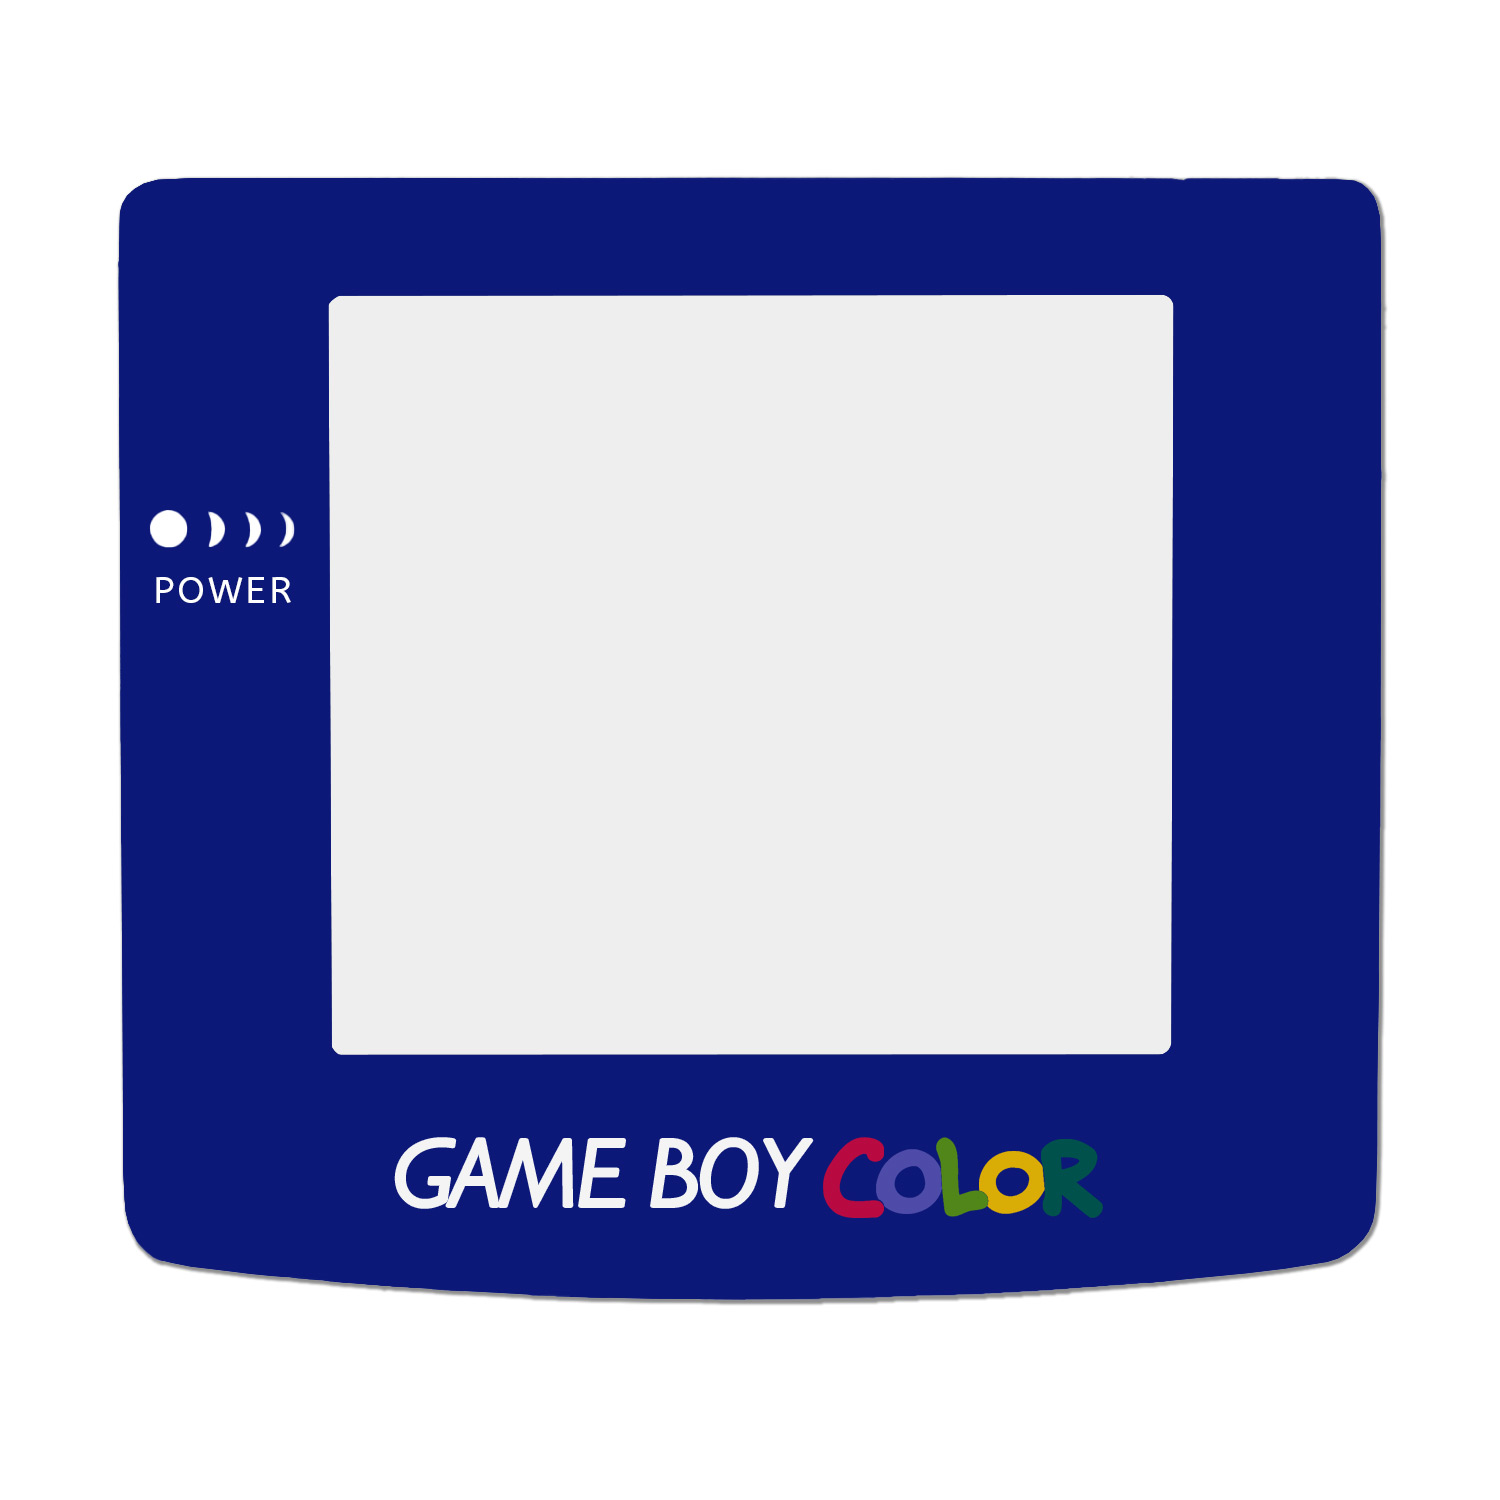 Game Boy Color Display Disc (Blue)